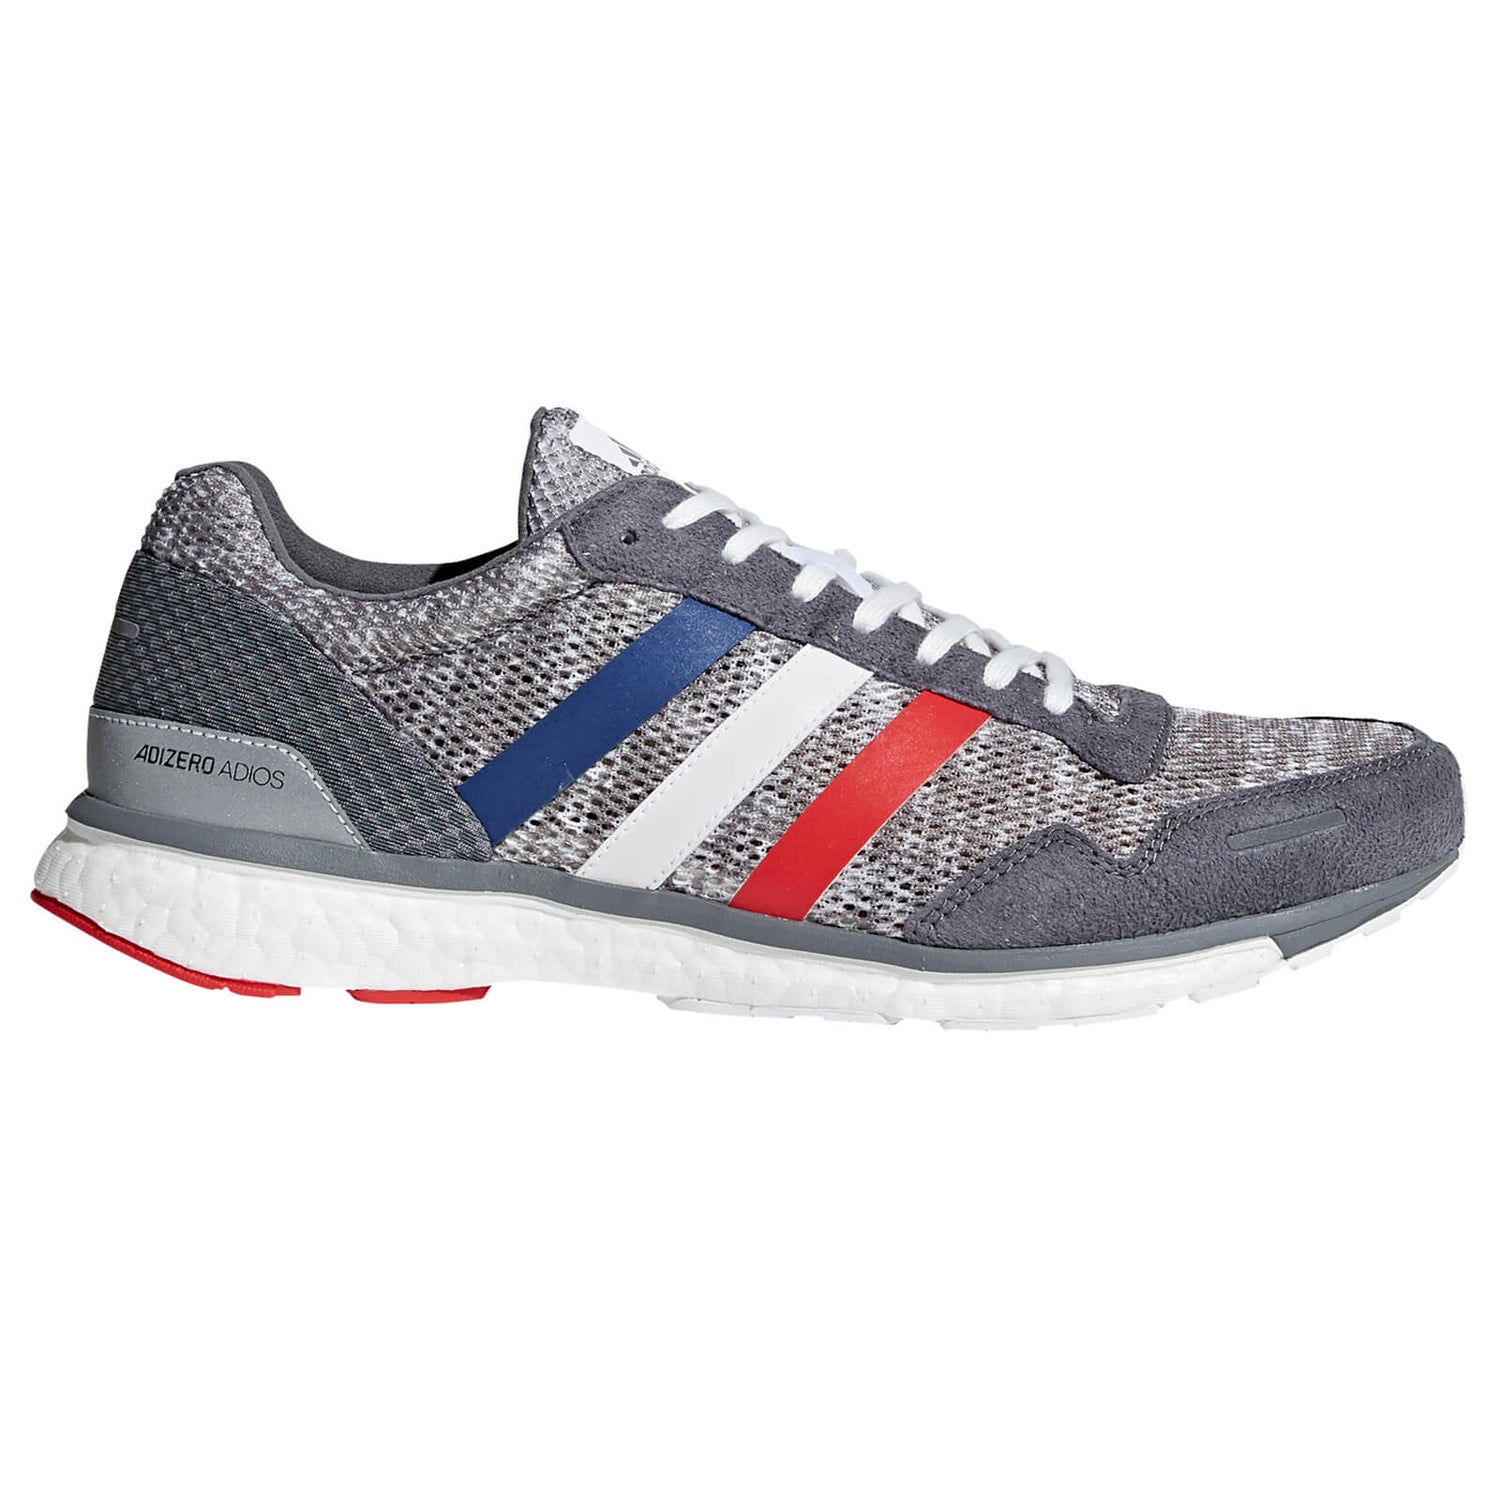 Andere plaatsen Storing Verdikken adidas Adizero Adios 3 Aktiv Running Shoes - Grey/White/Scarlet |  ProBikeKit.com